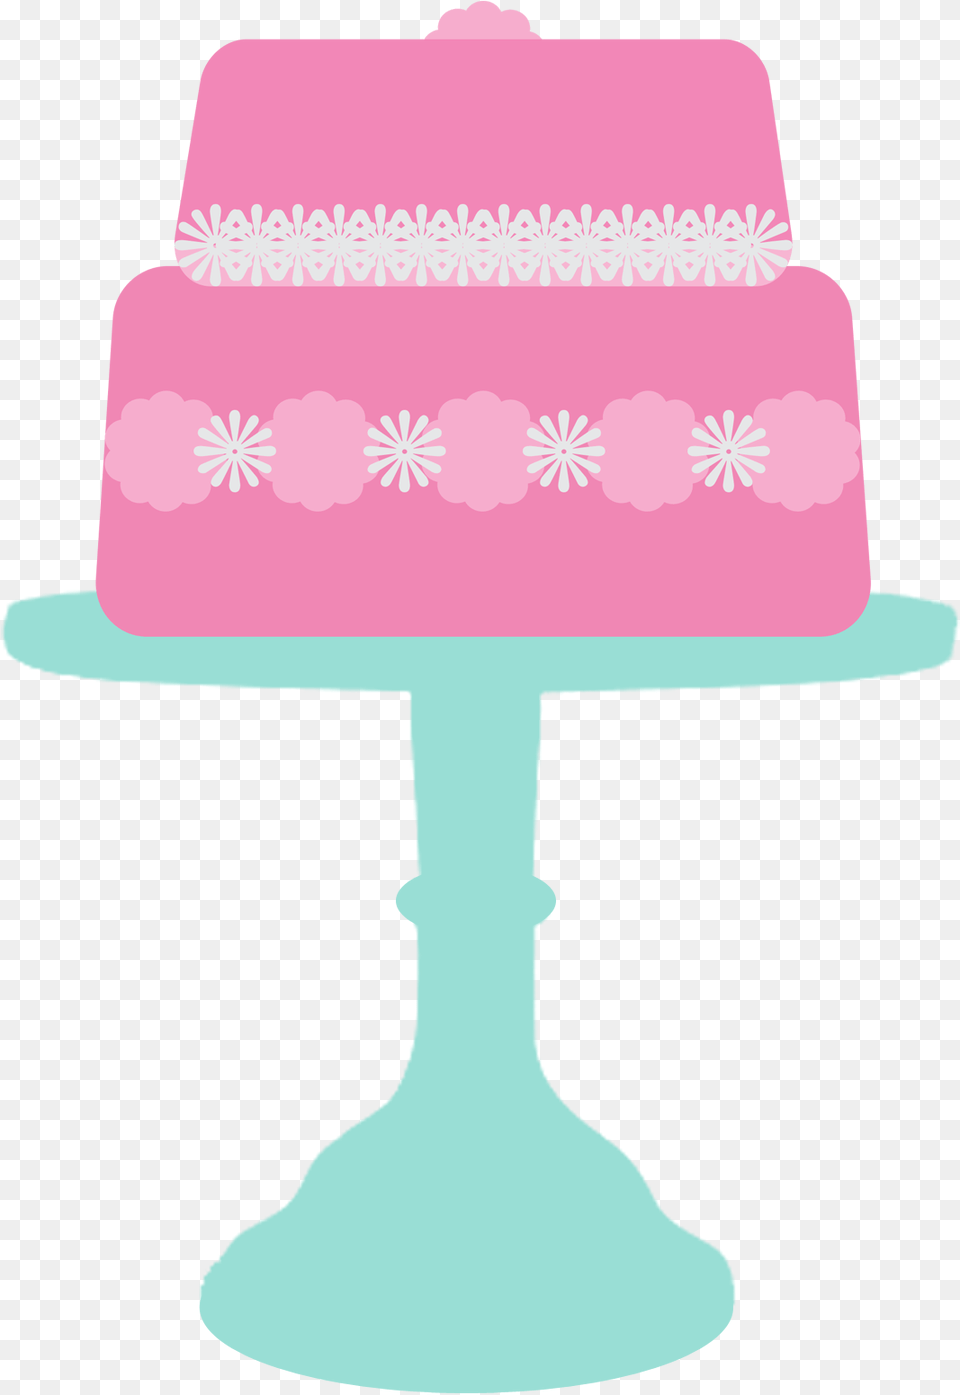 Bake Sale Flyer Template Bake Sale Flyers Cake Stand Clip Art, Dessert, Food, Birthday Cake, Cream Png